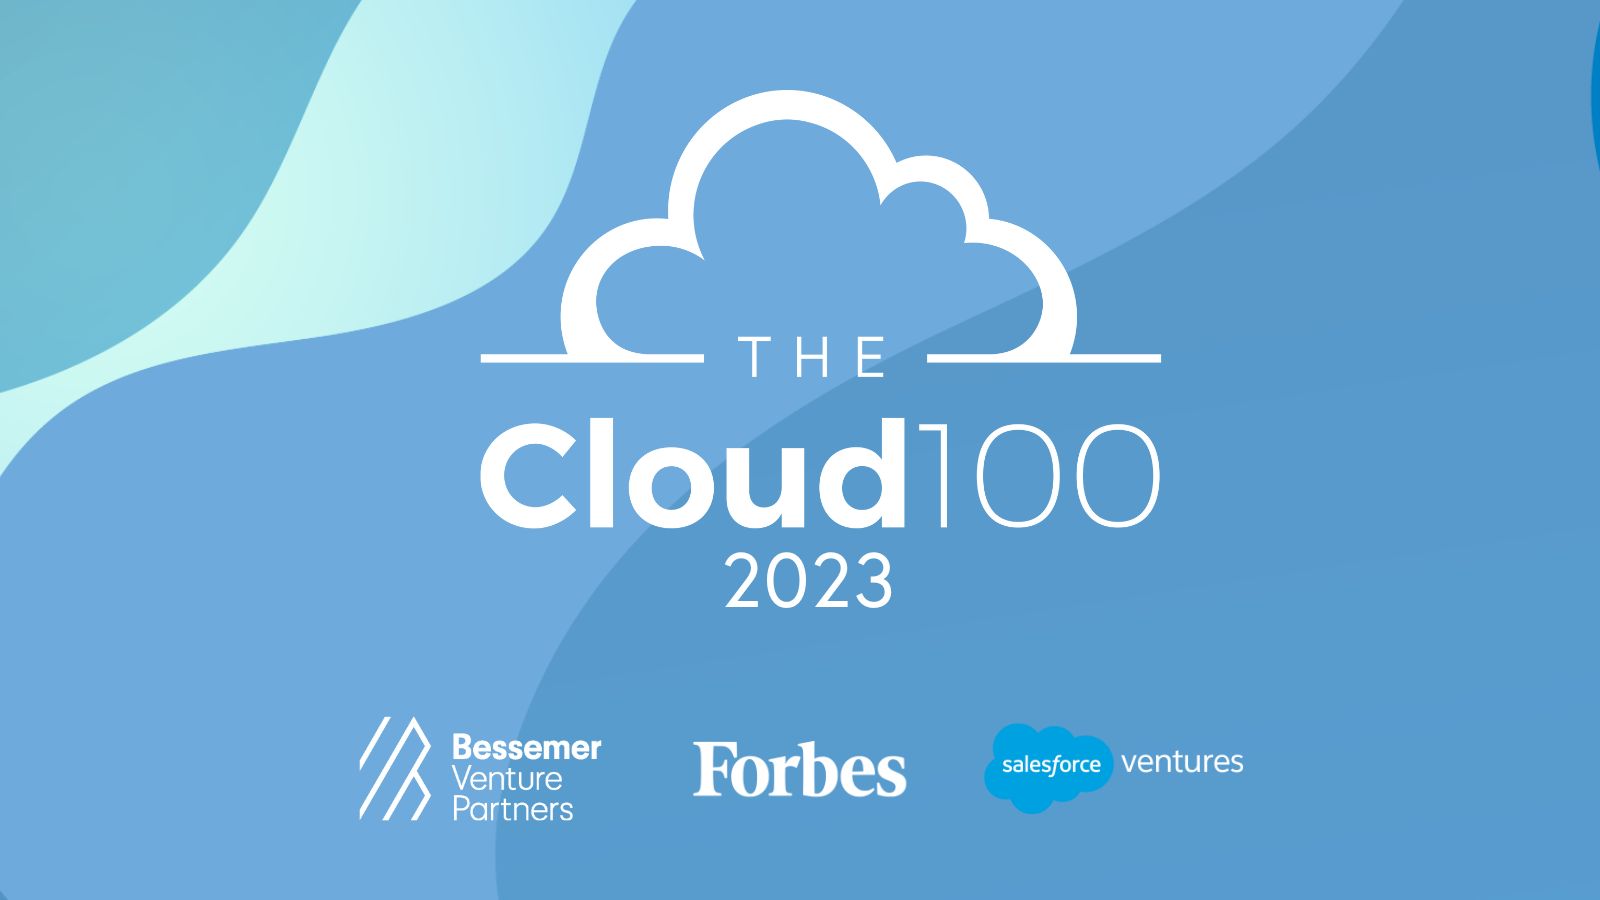 cloud 100 logo